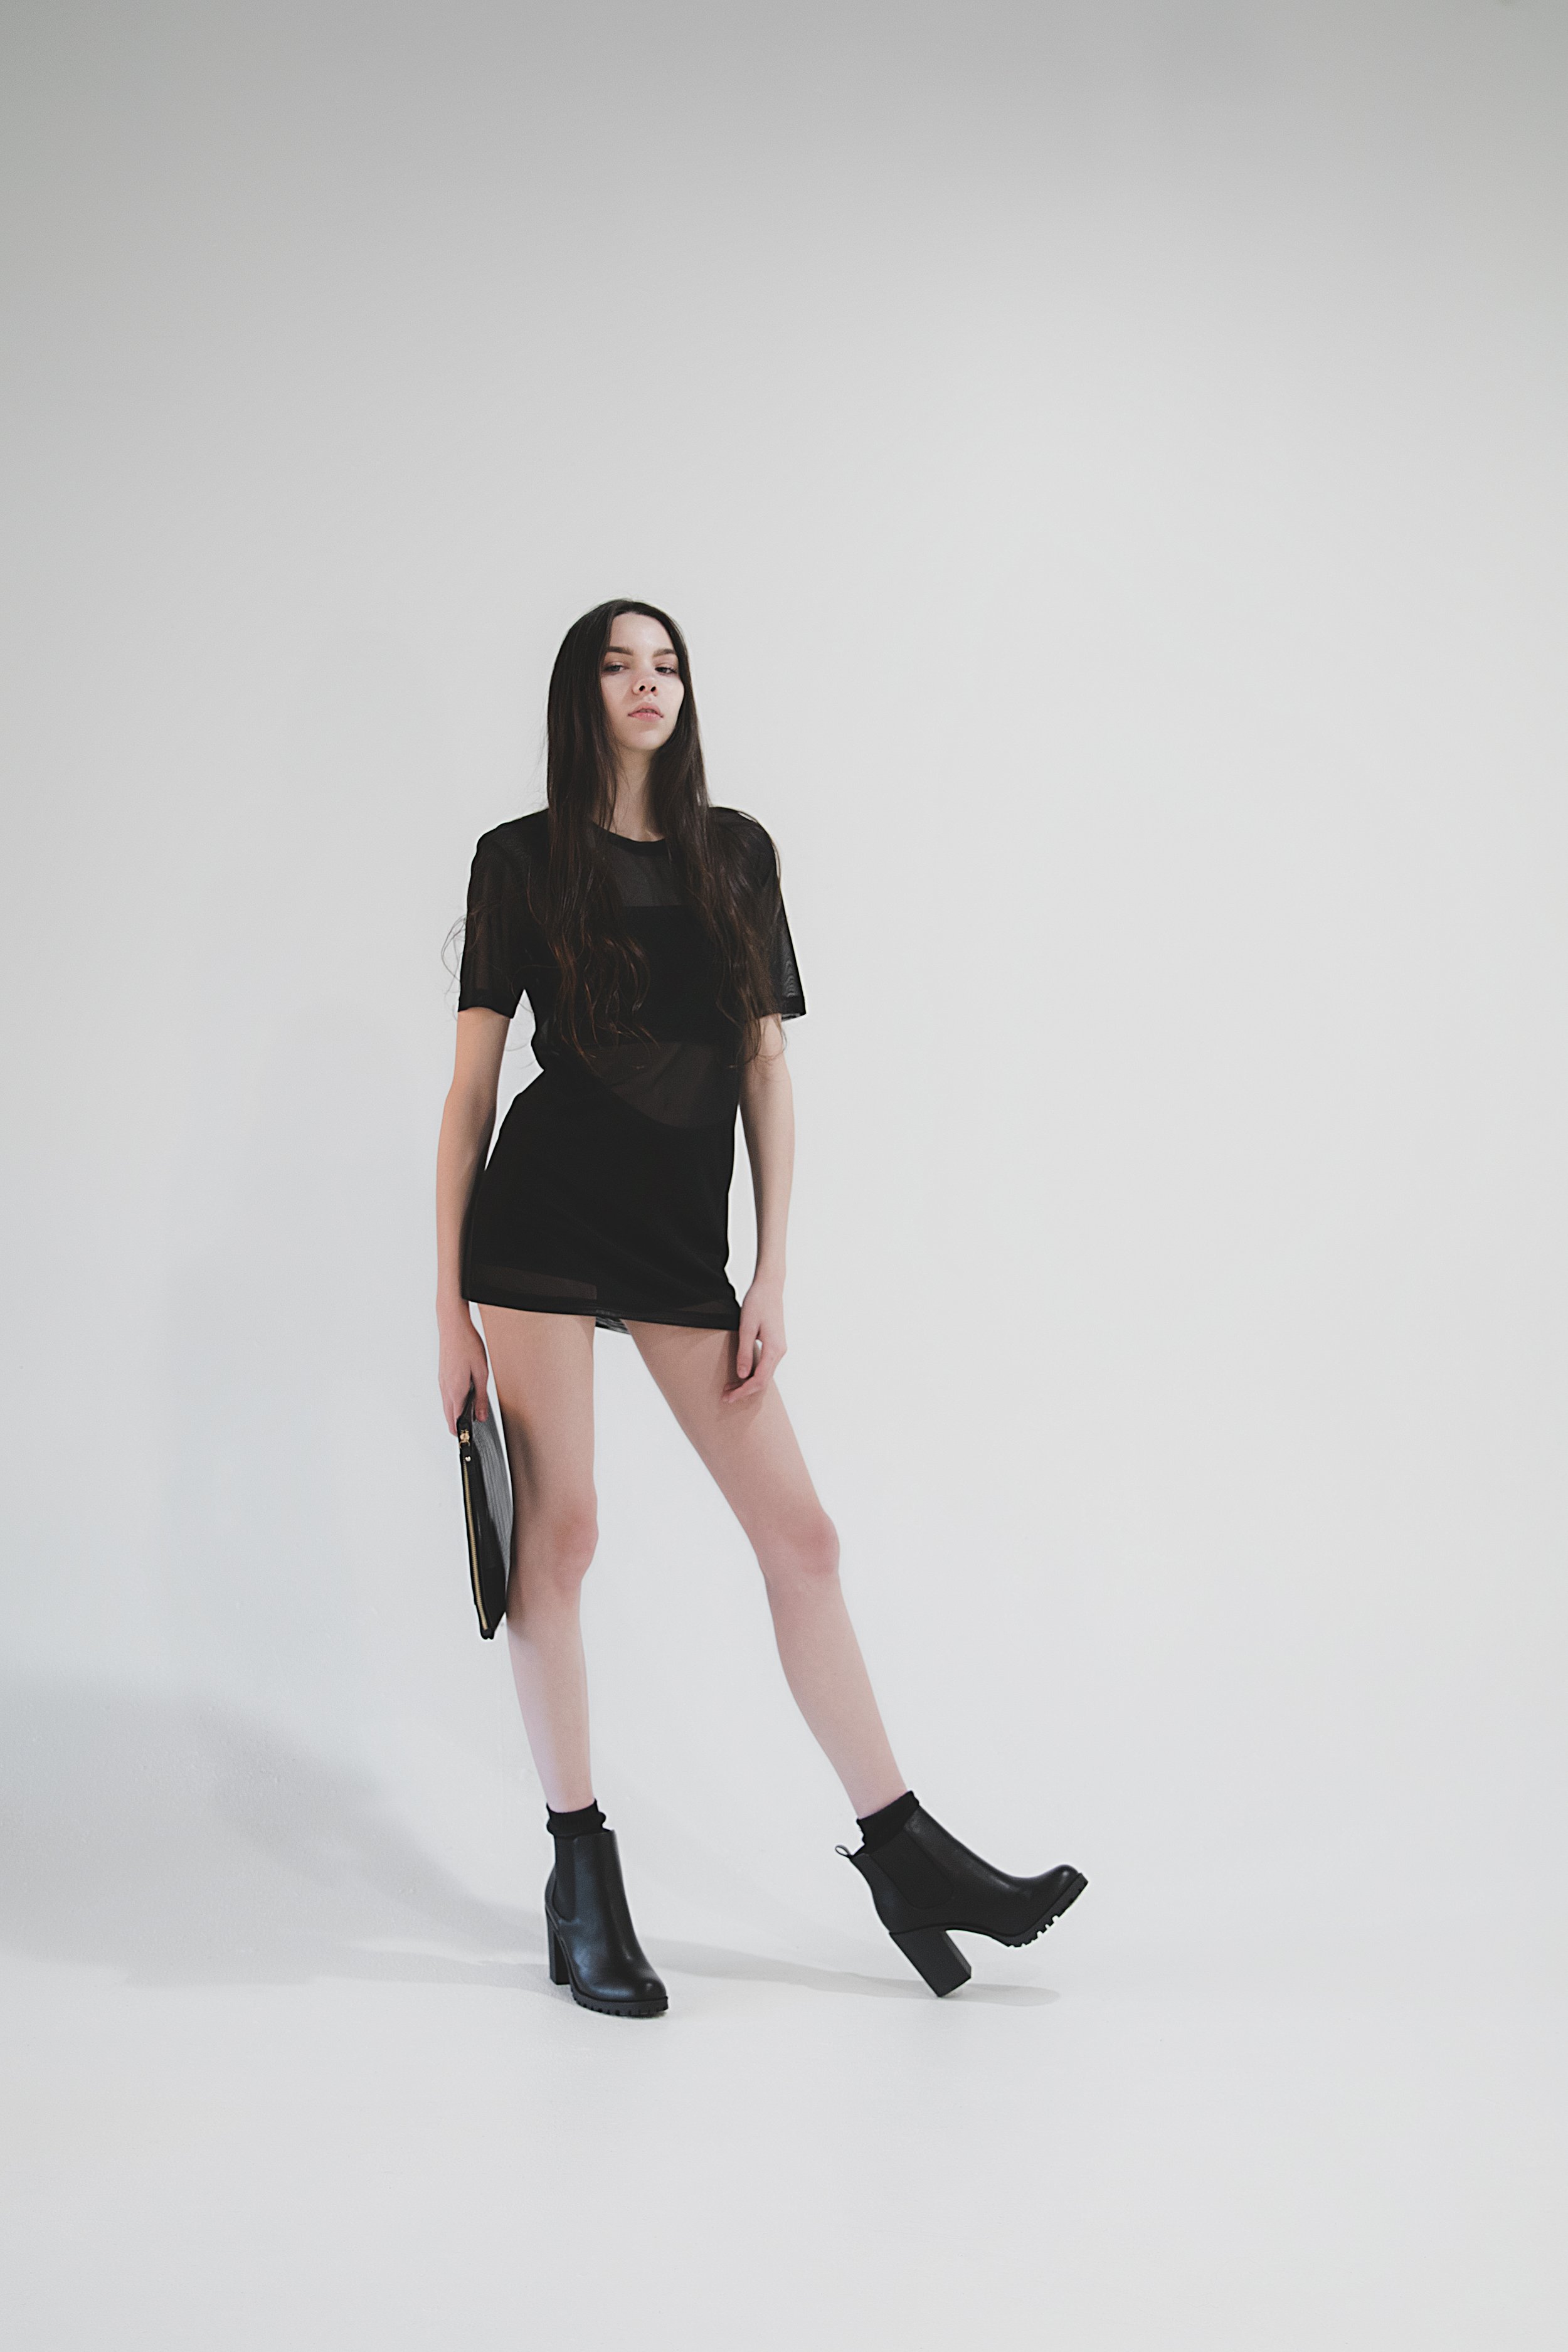  Model: Olivia Giallanza  Agency: Latitude Talent   Stylist: Revorish @revorish   Photography: Dario M Rodriguez 